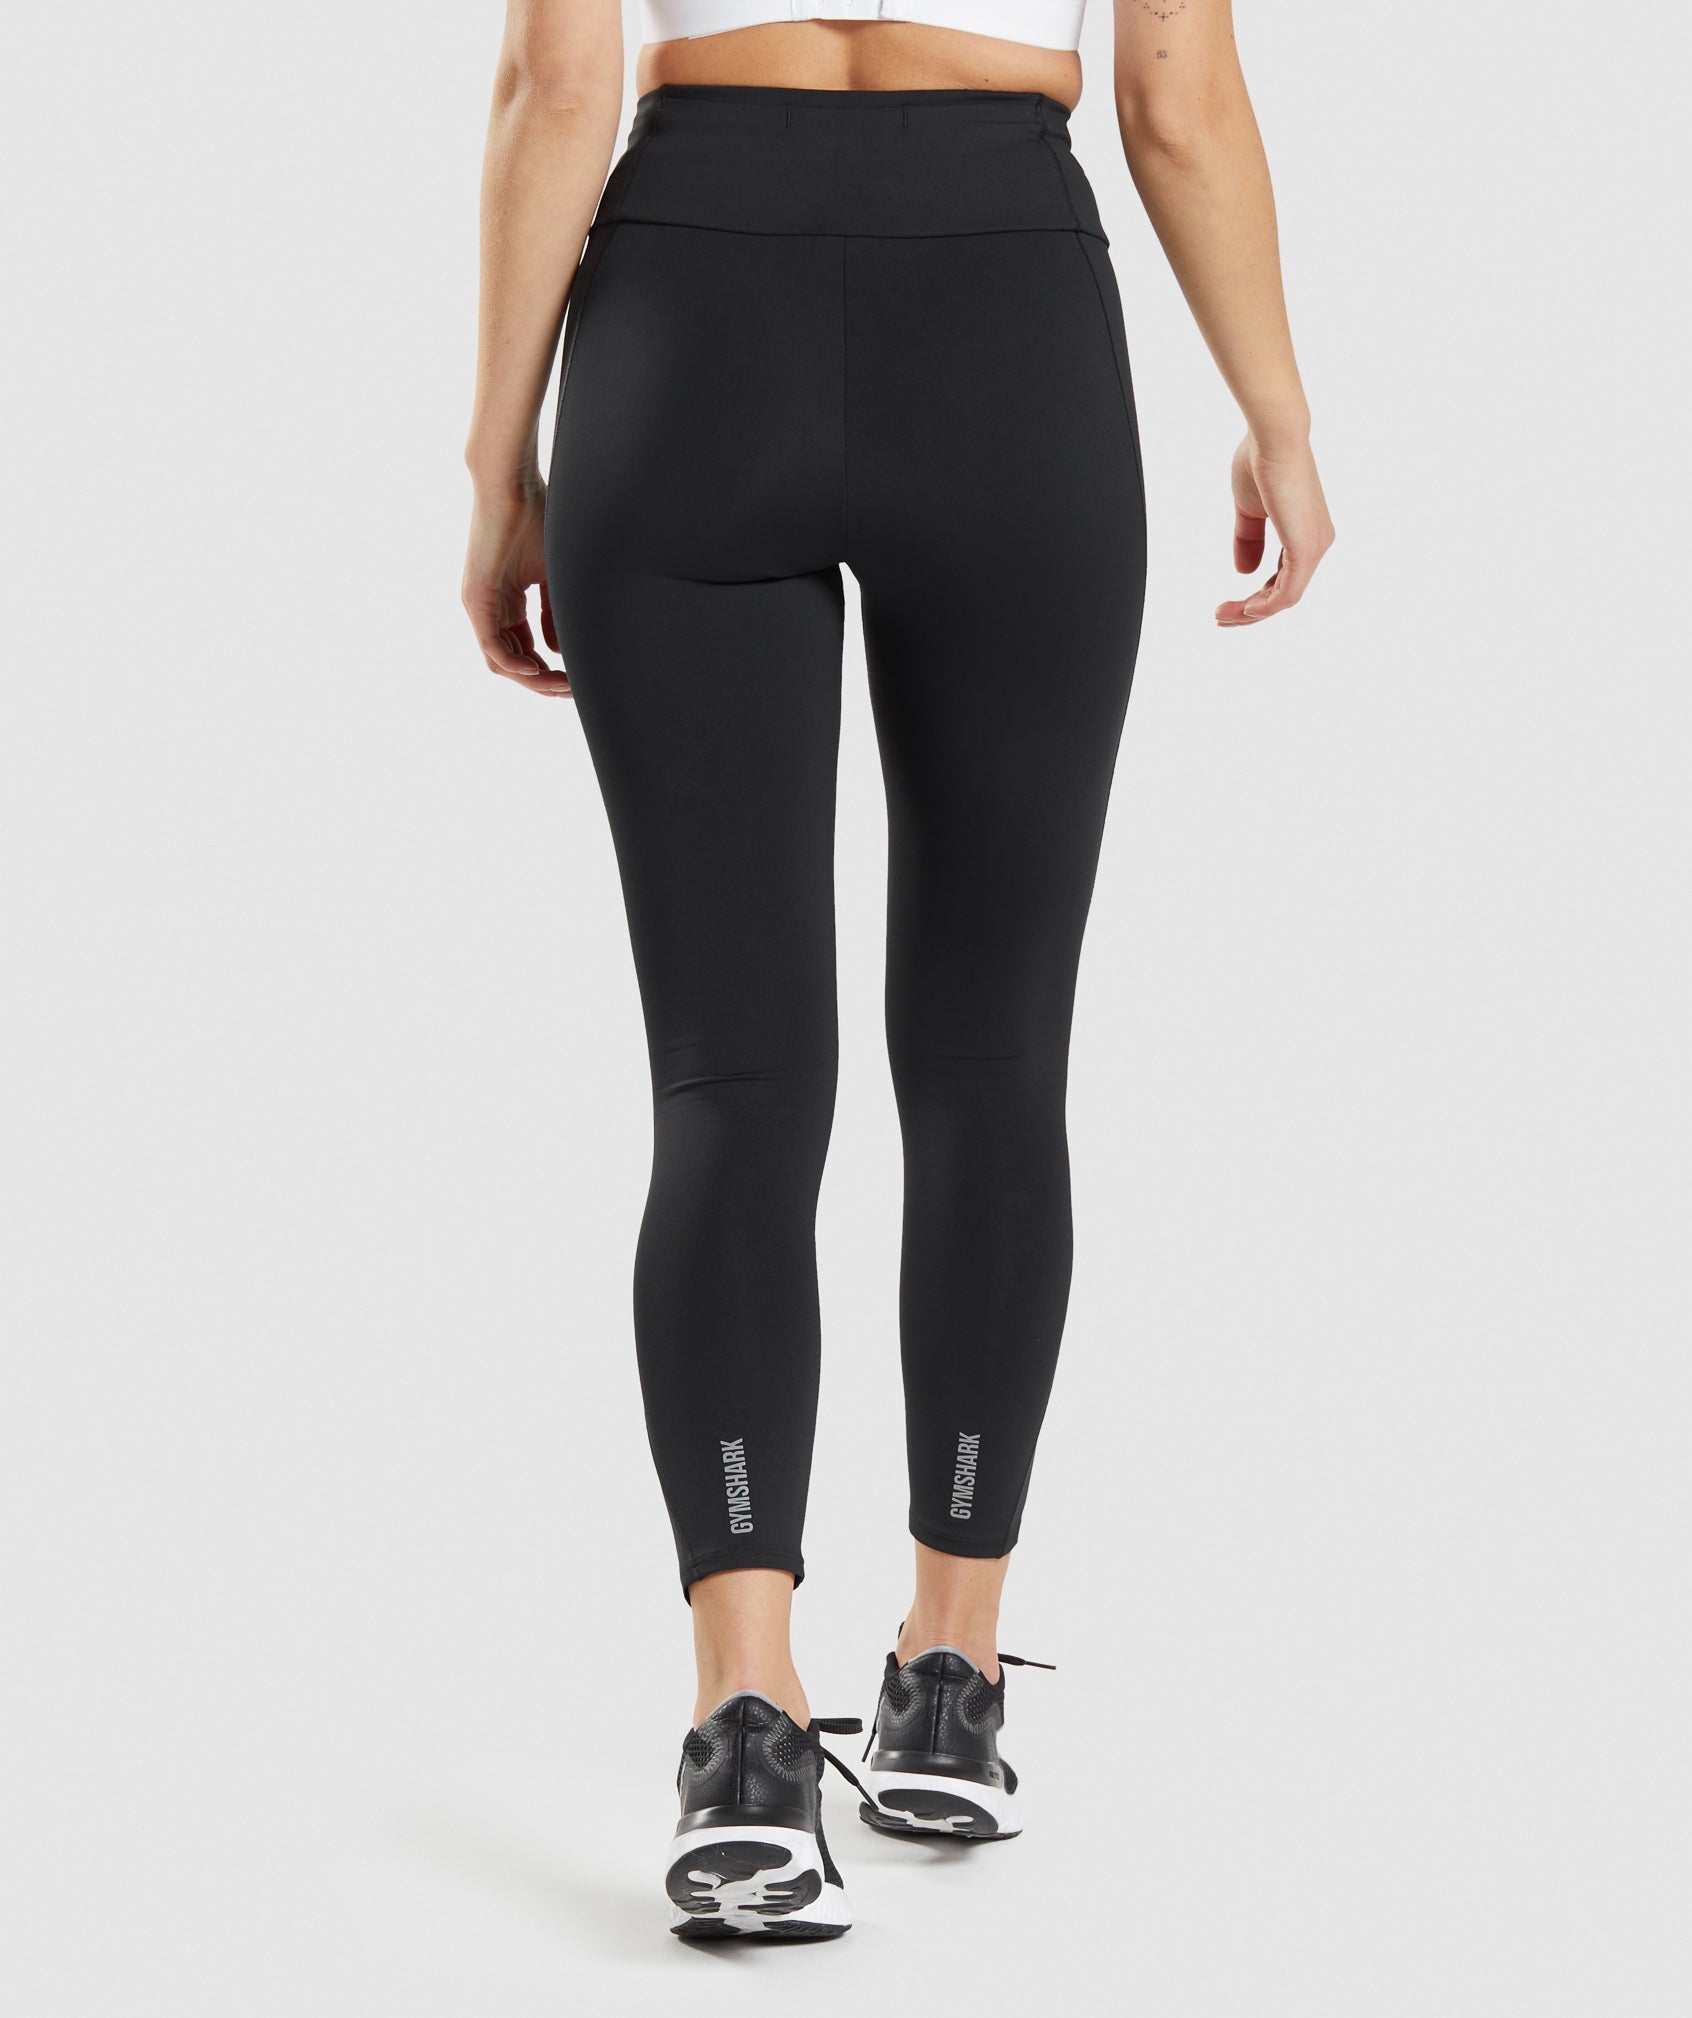 Gymshark Speed Leggings Black Size M - $40 (11% Off Retail) - From